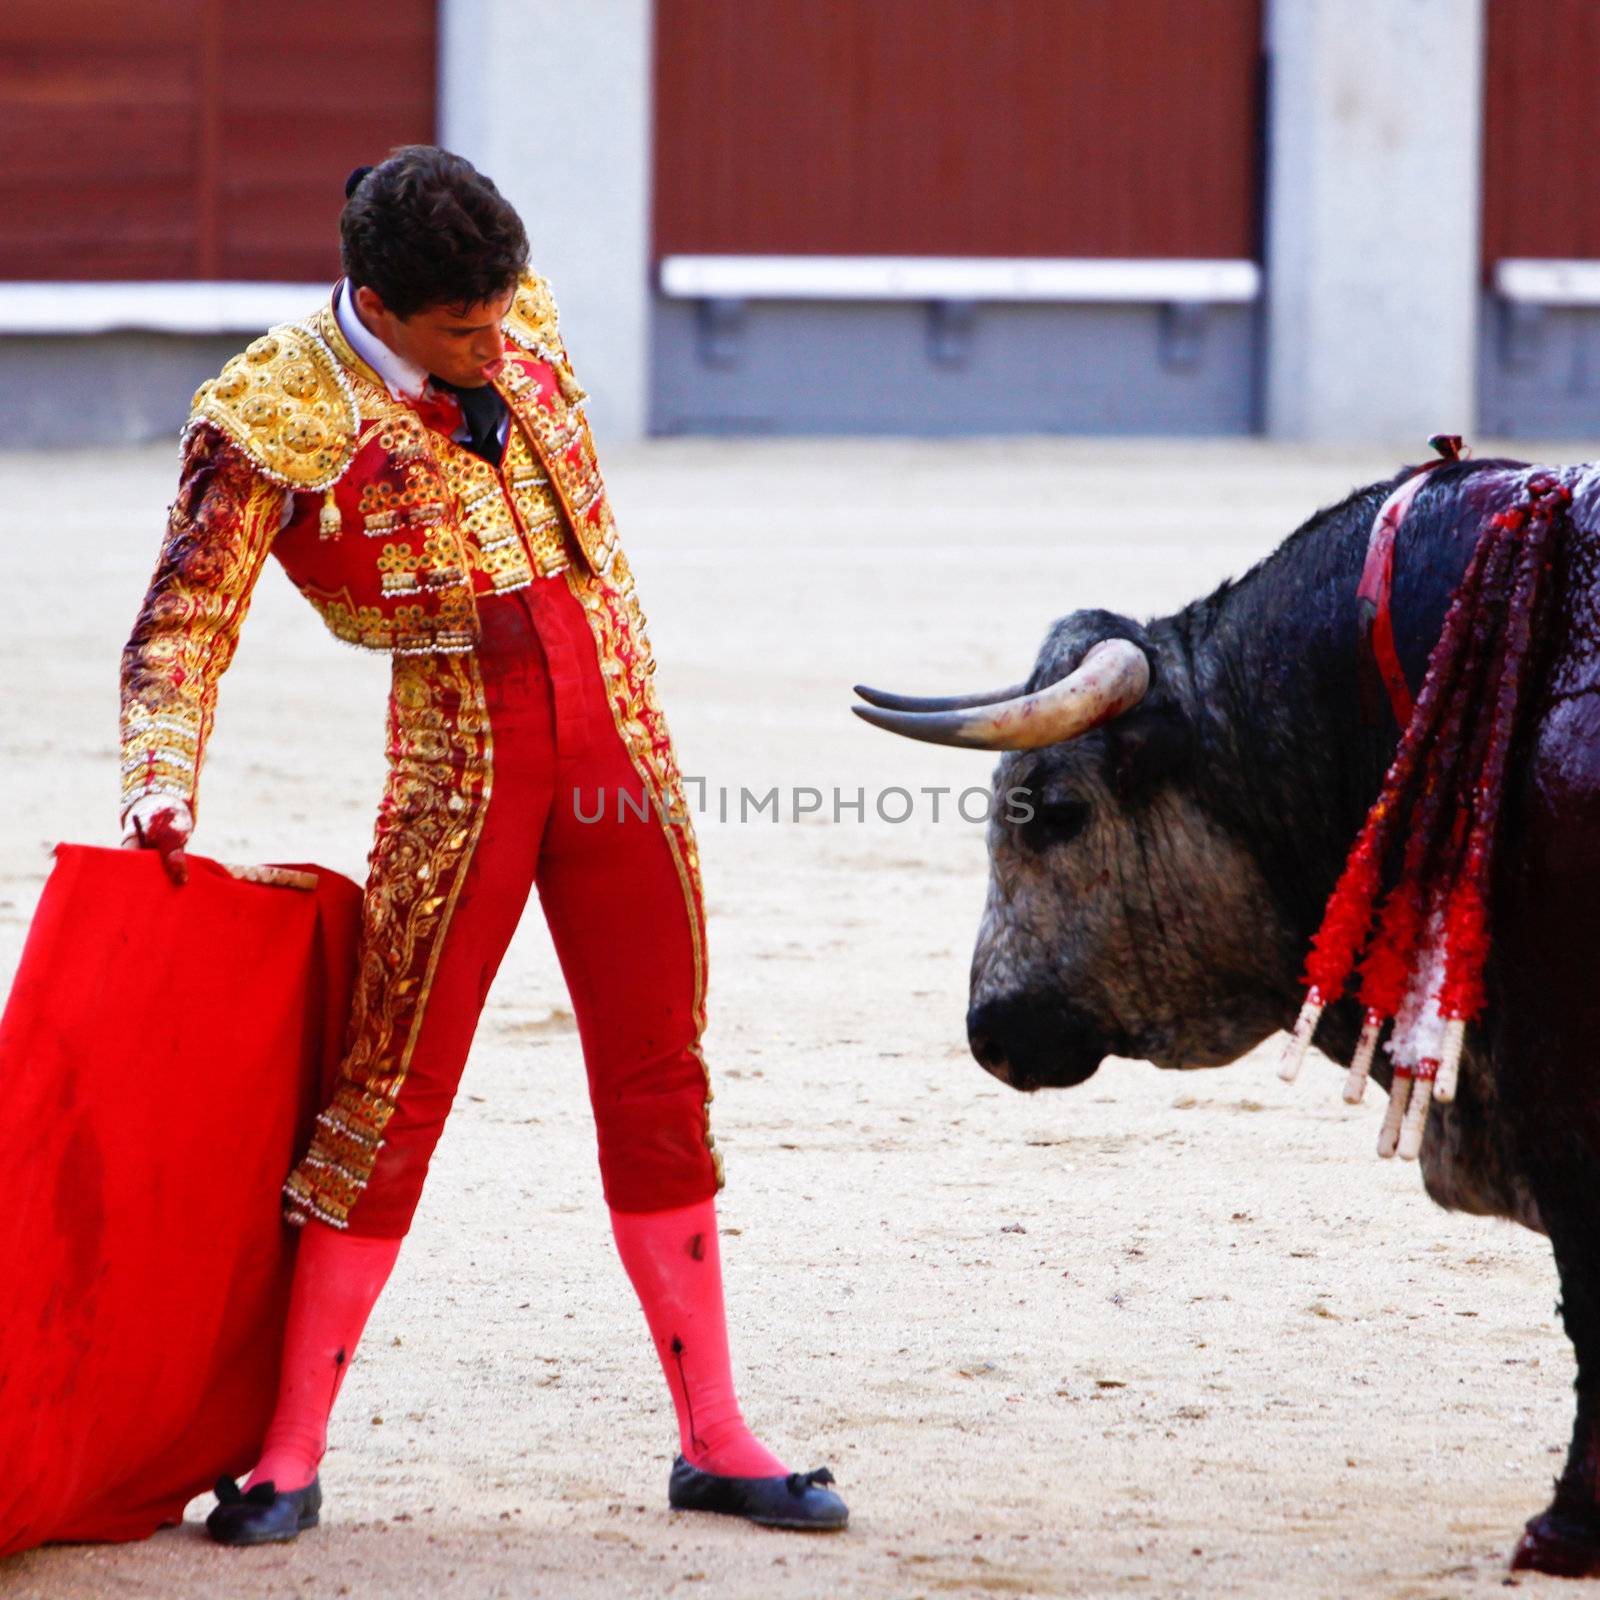 Traditional corrida - bullfighting in spain by kasto